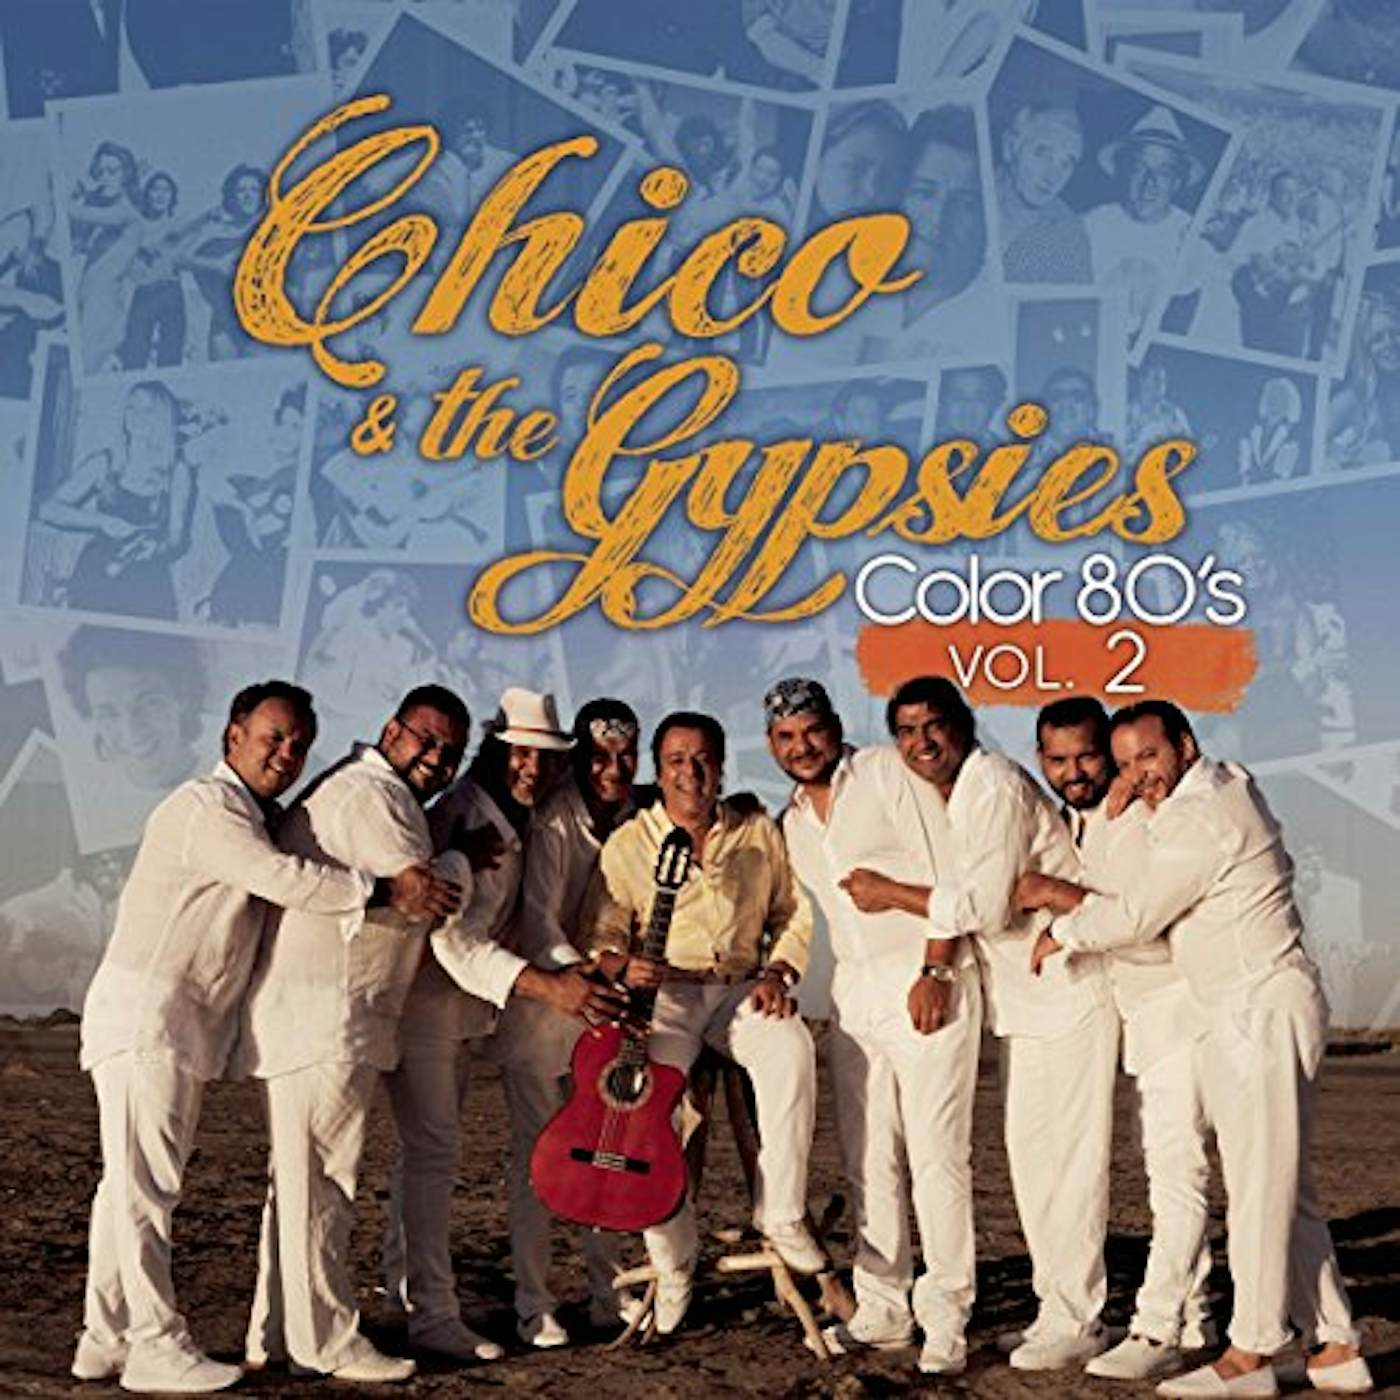 Chico & The Gypsies COLOR 80'S VOLUME 2 CD